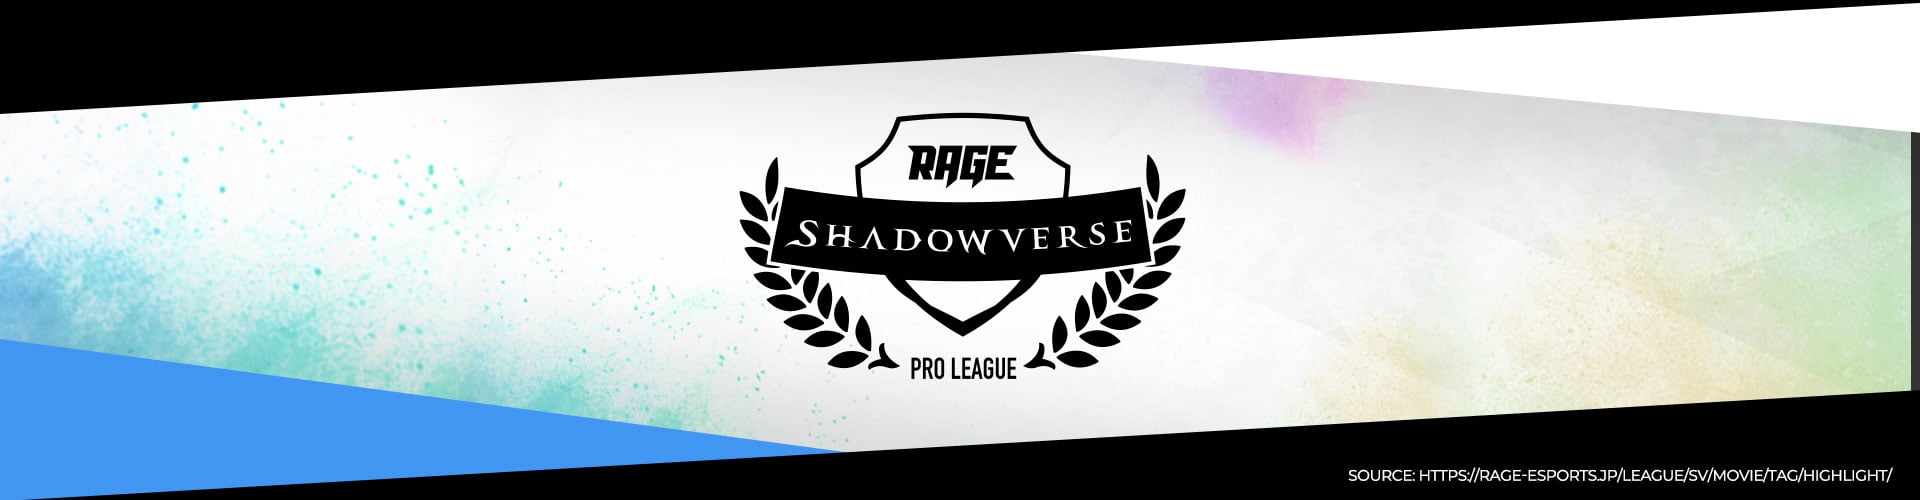 RAGE Shadowverse Pro League 20-21